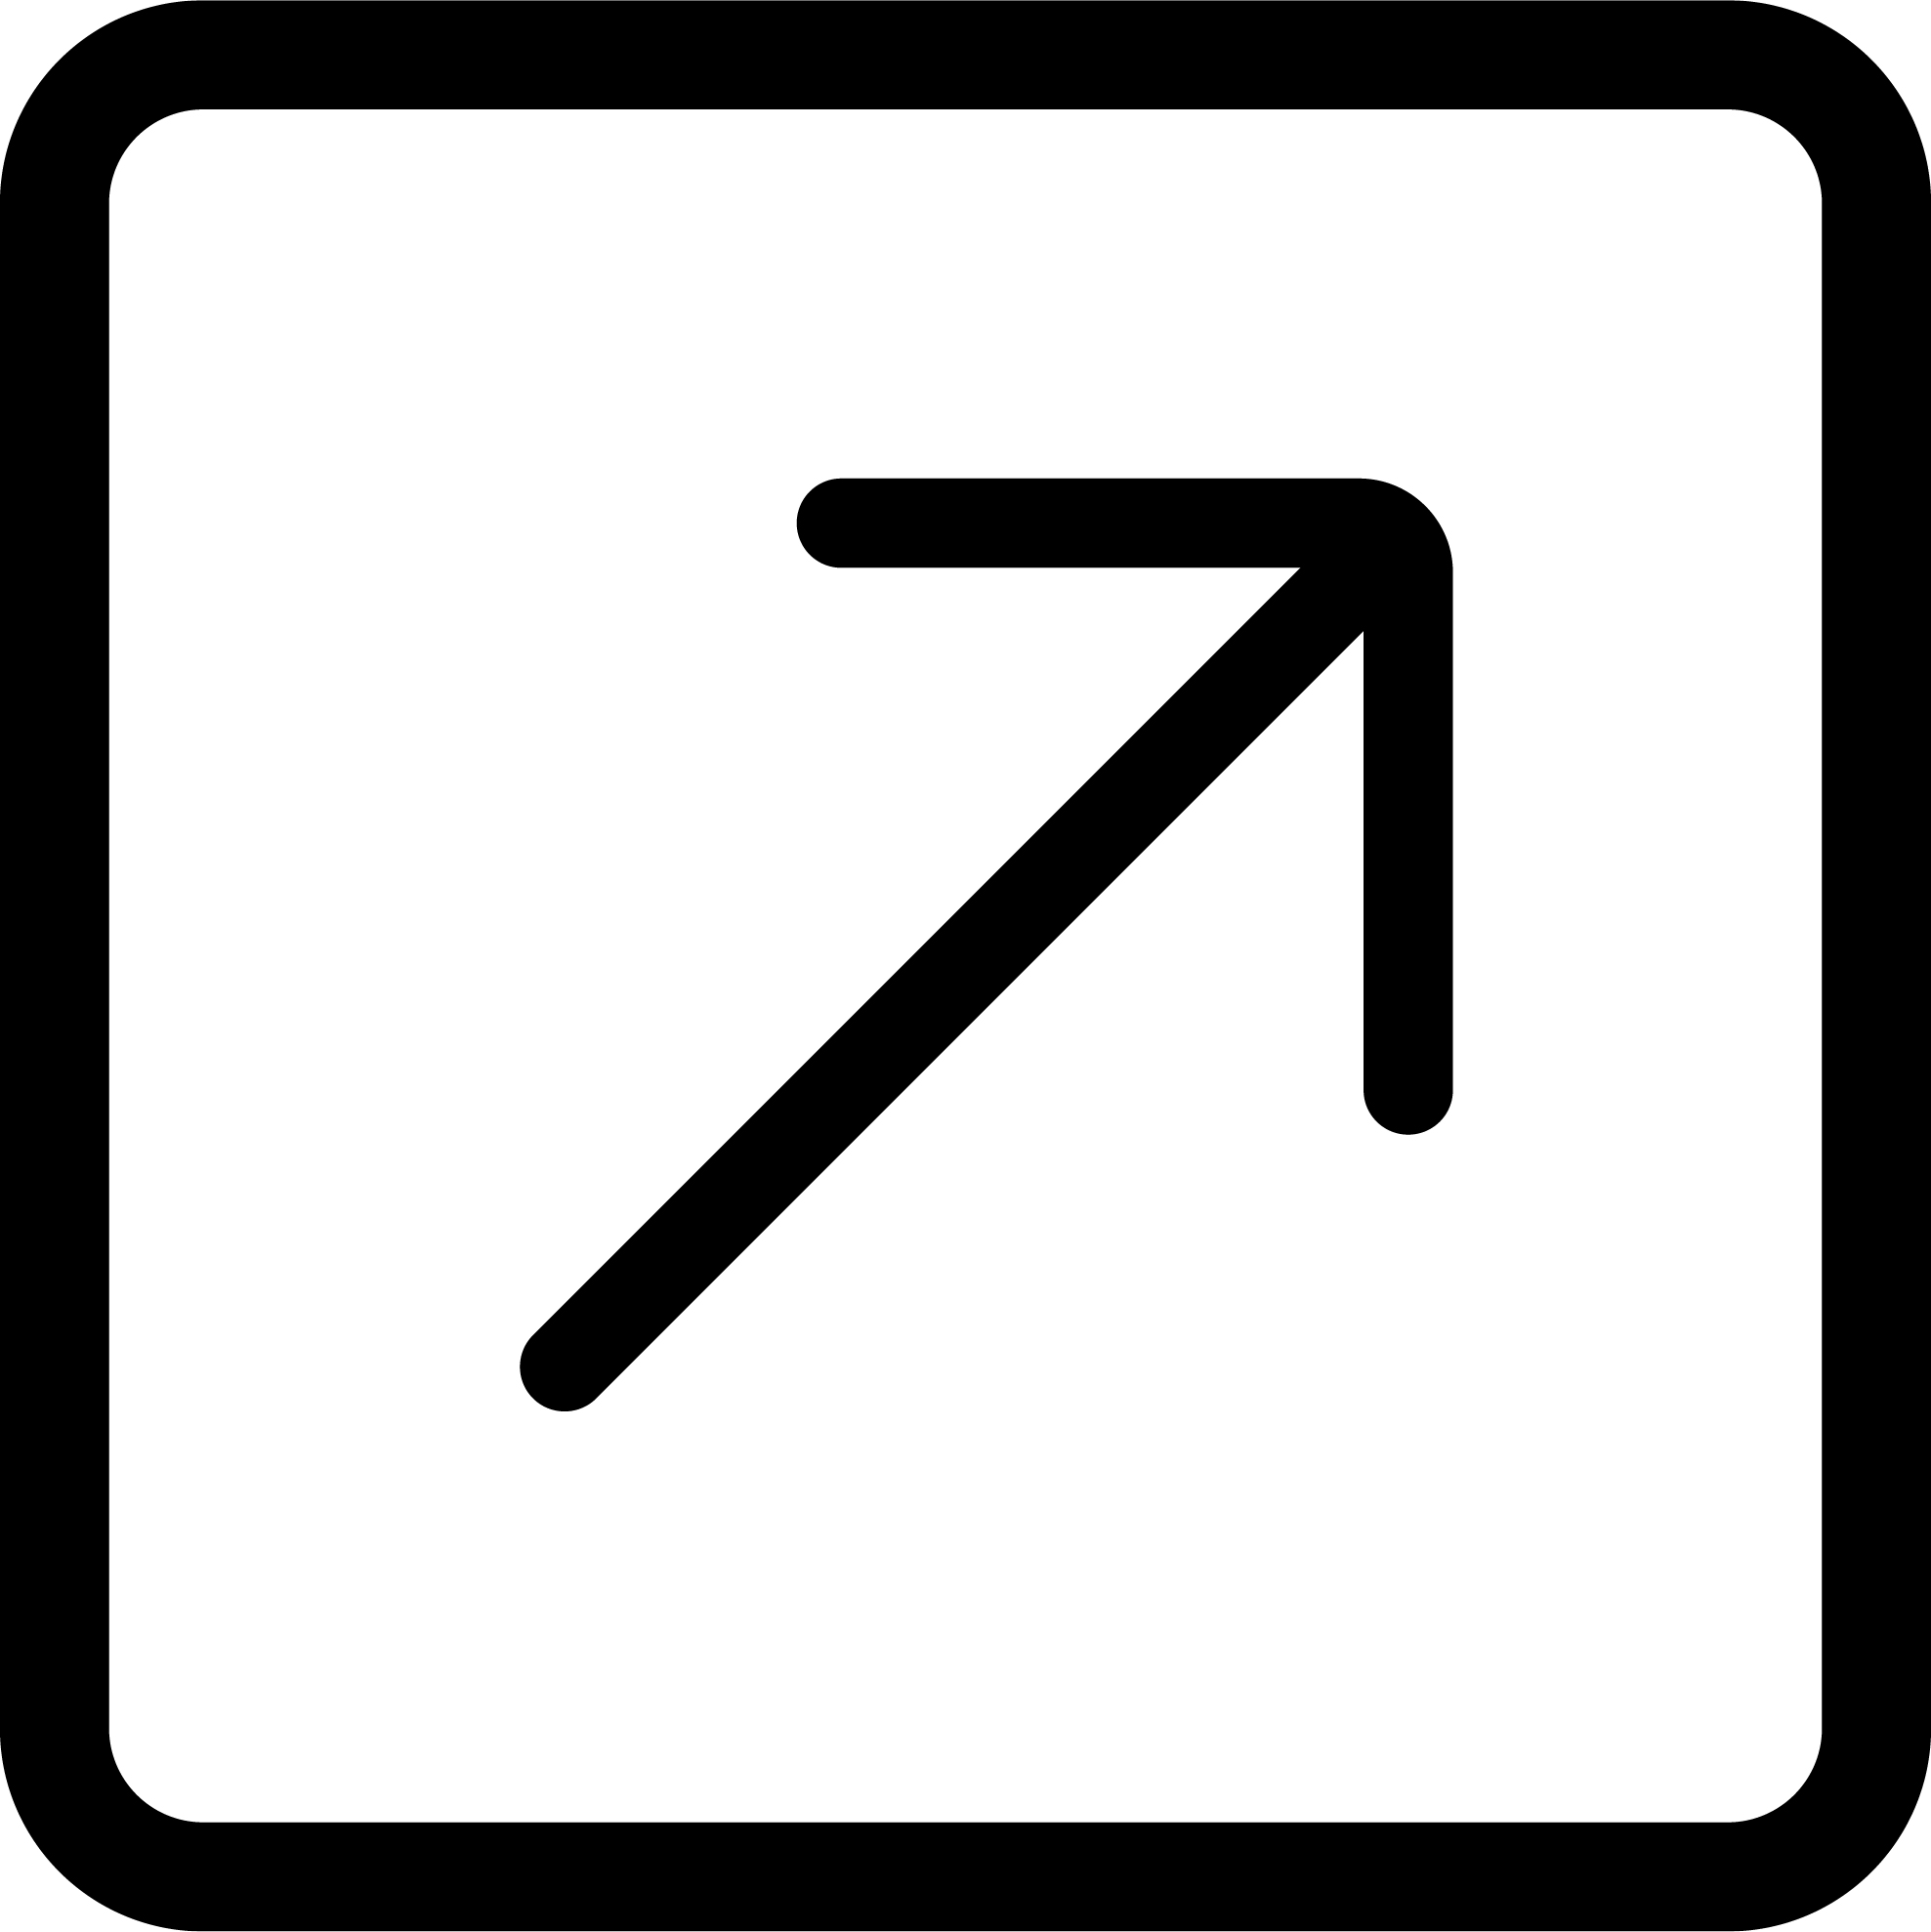 Arrow pointing in diagonally upwards